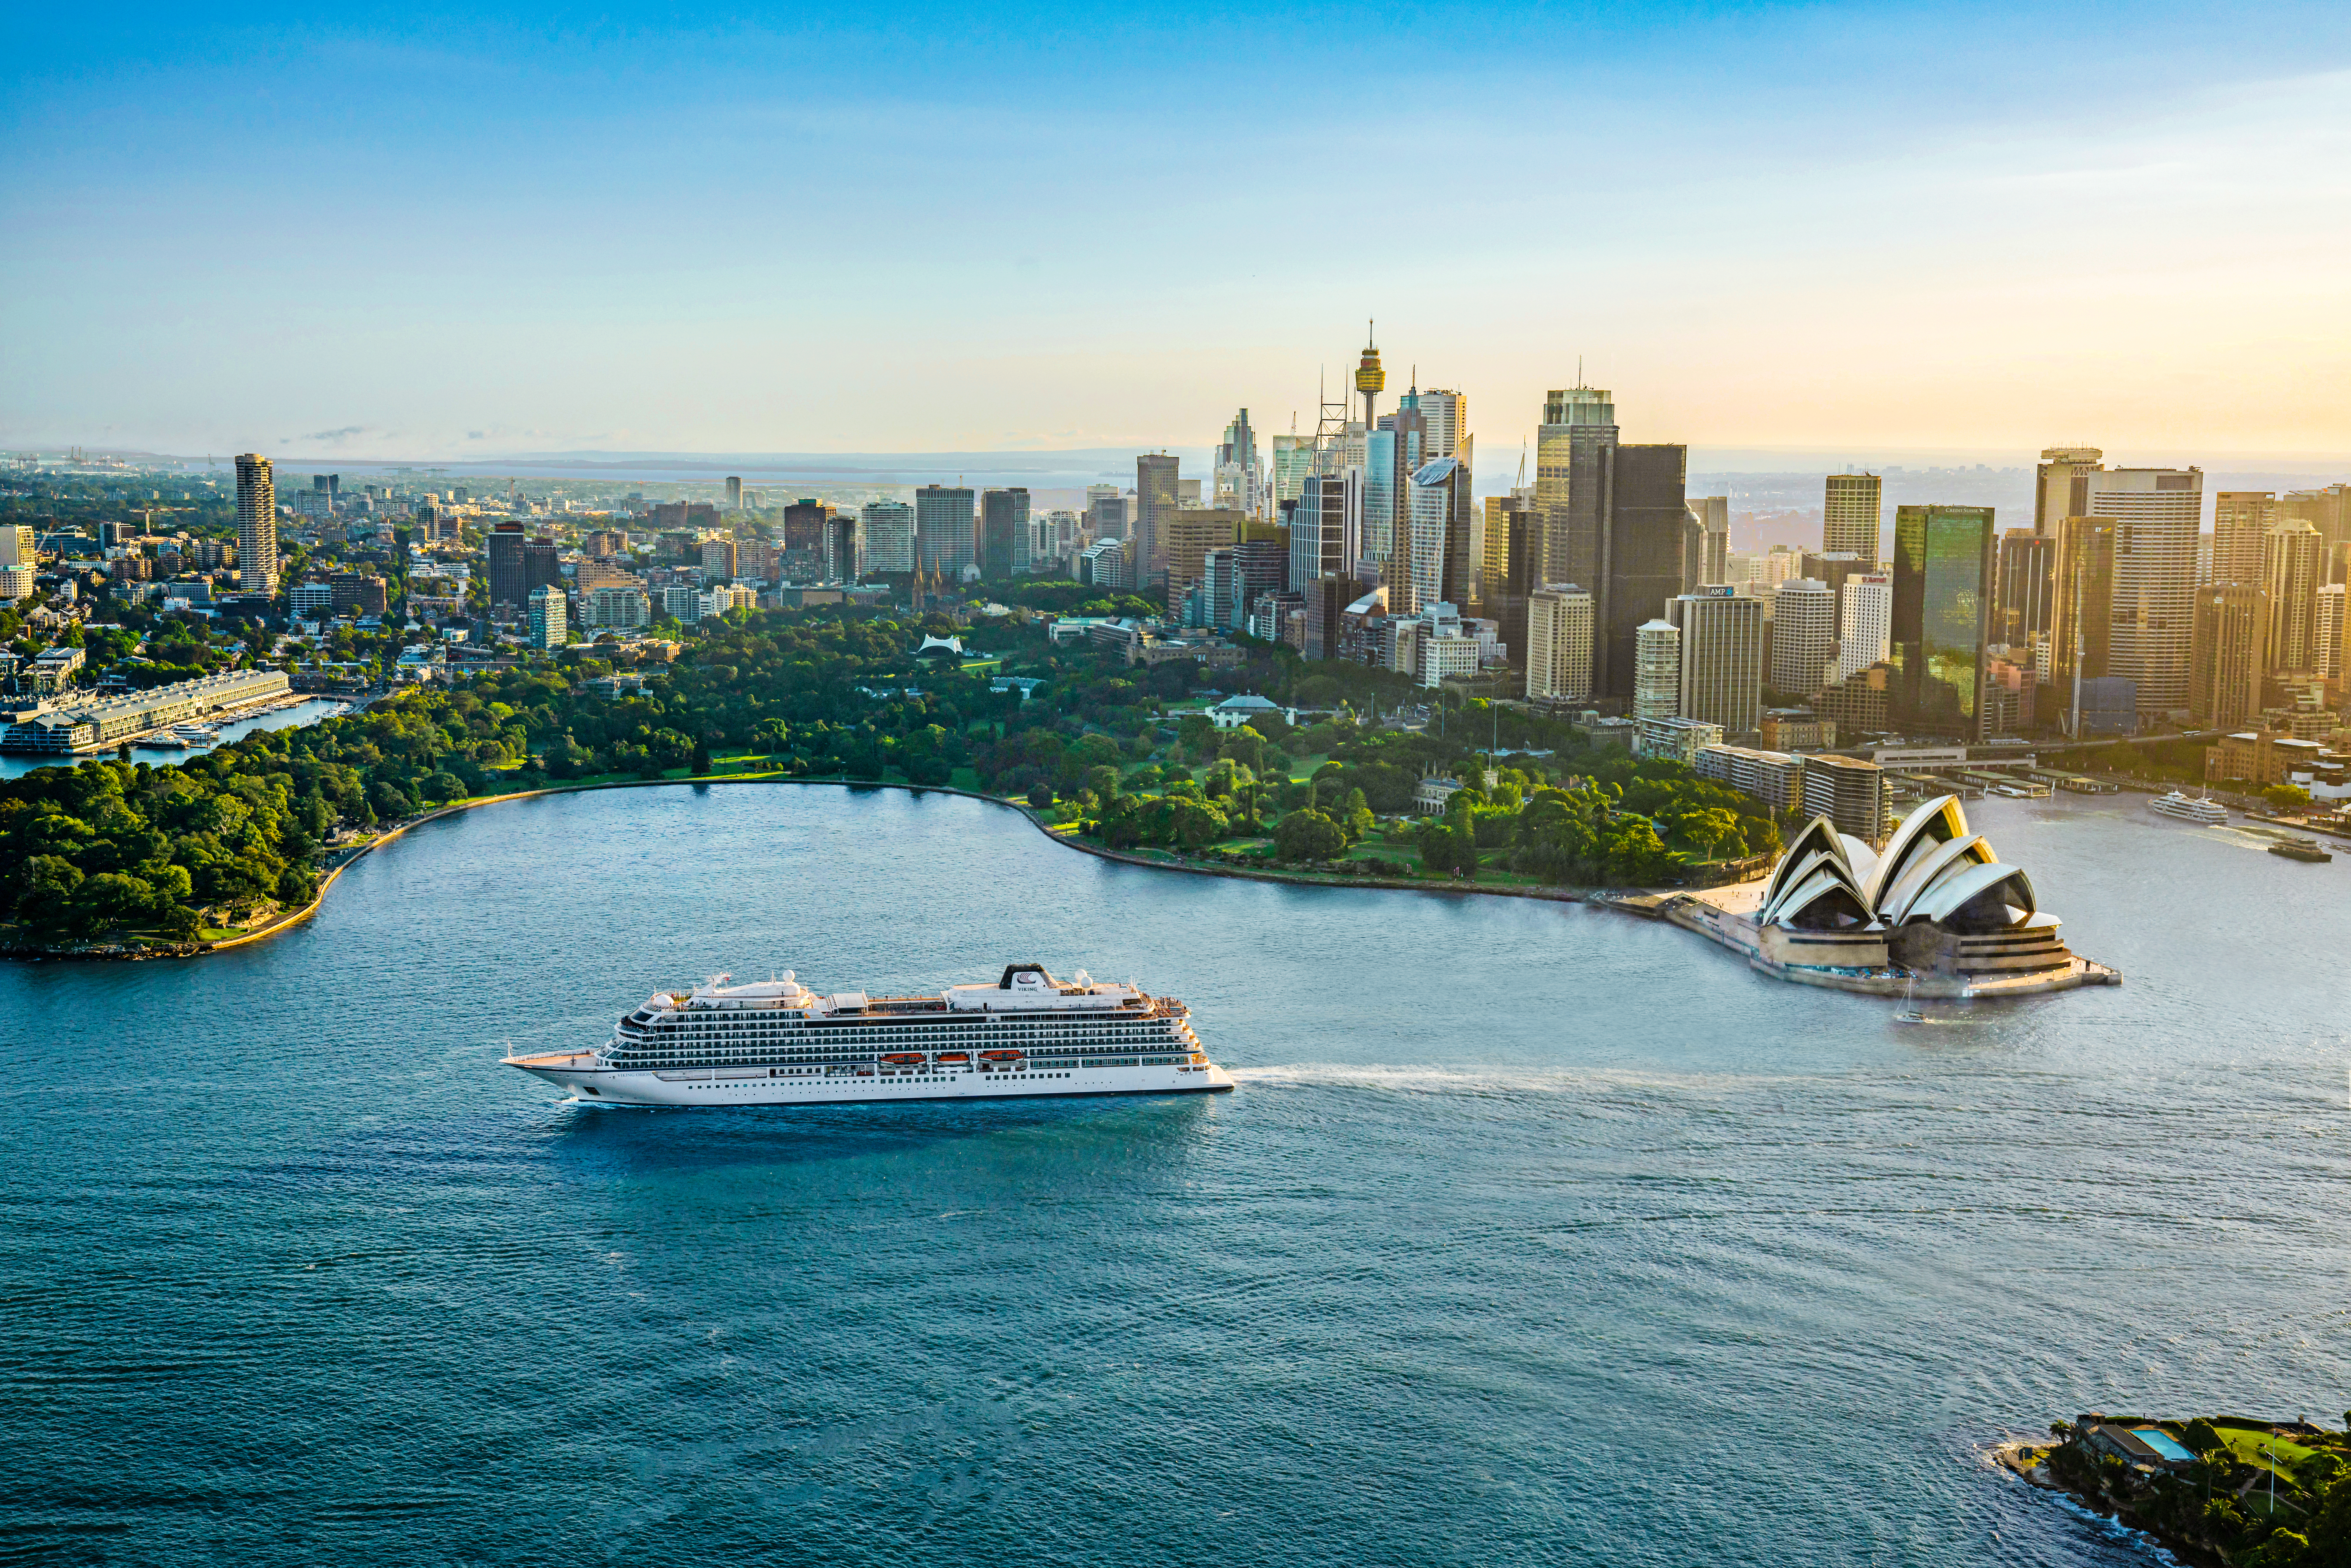 View of the Viking Orion in Sydney Harbor, Australia